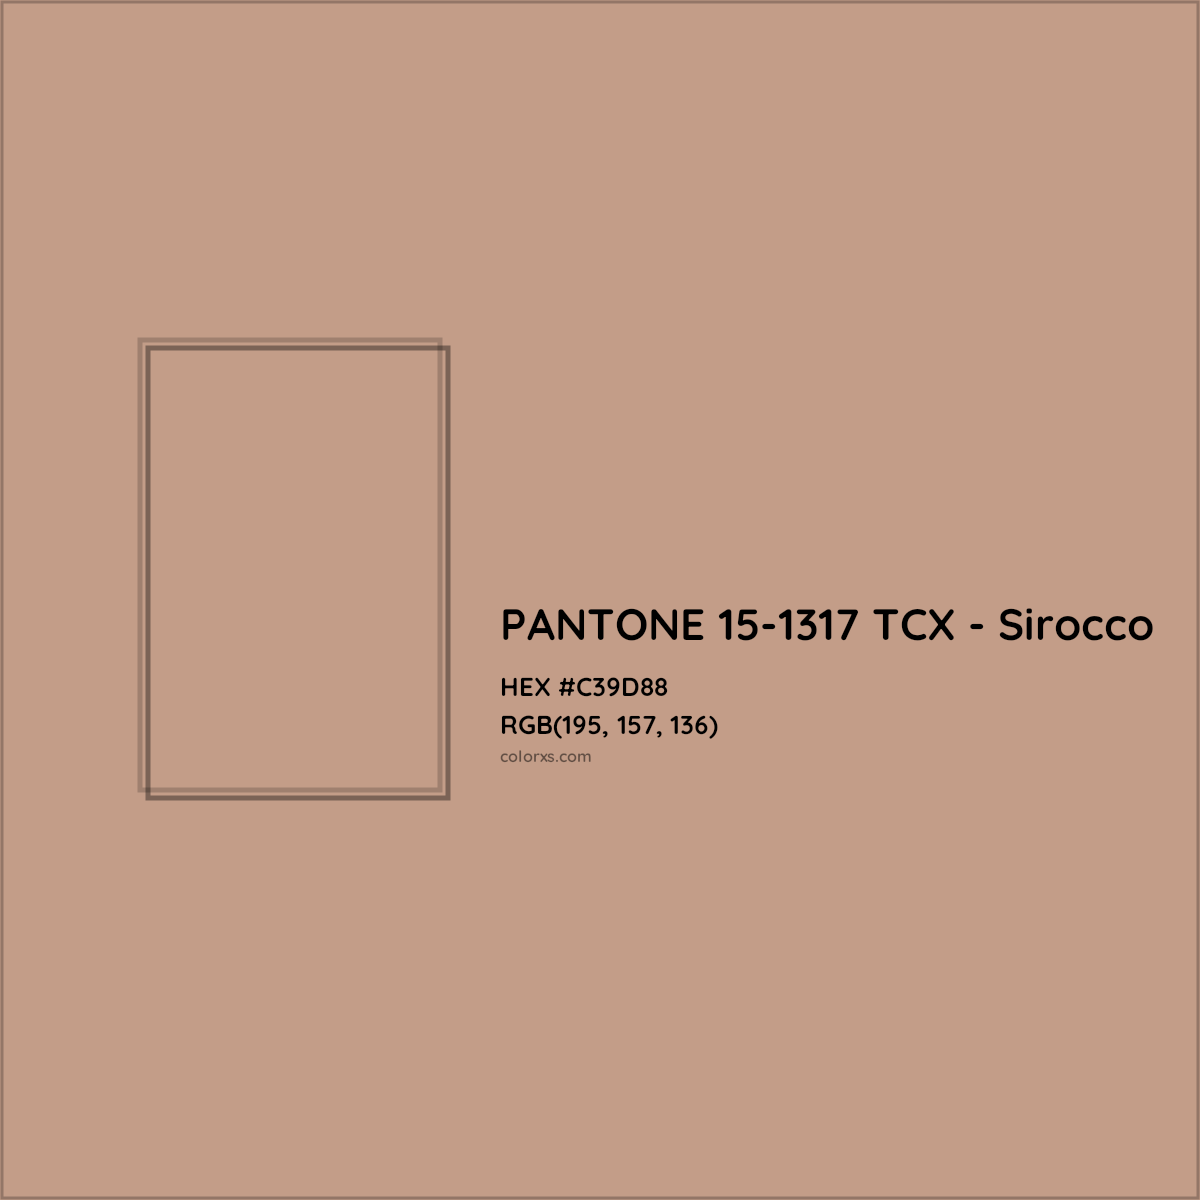 HEX #C39D88 PANTONE 15-1317 TCX - Sirocco CMS Pantone TCX - Color Code